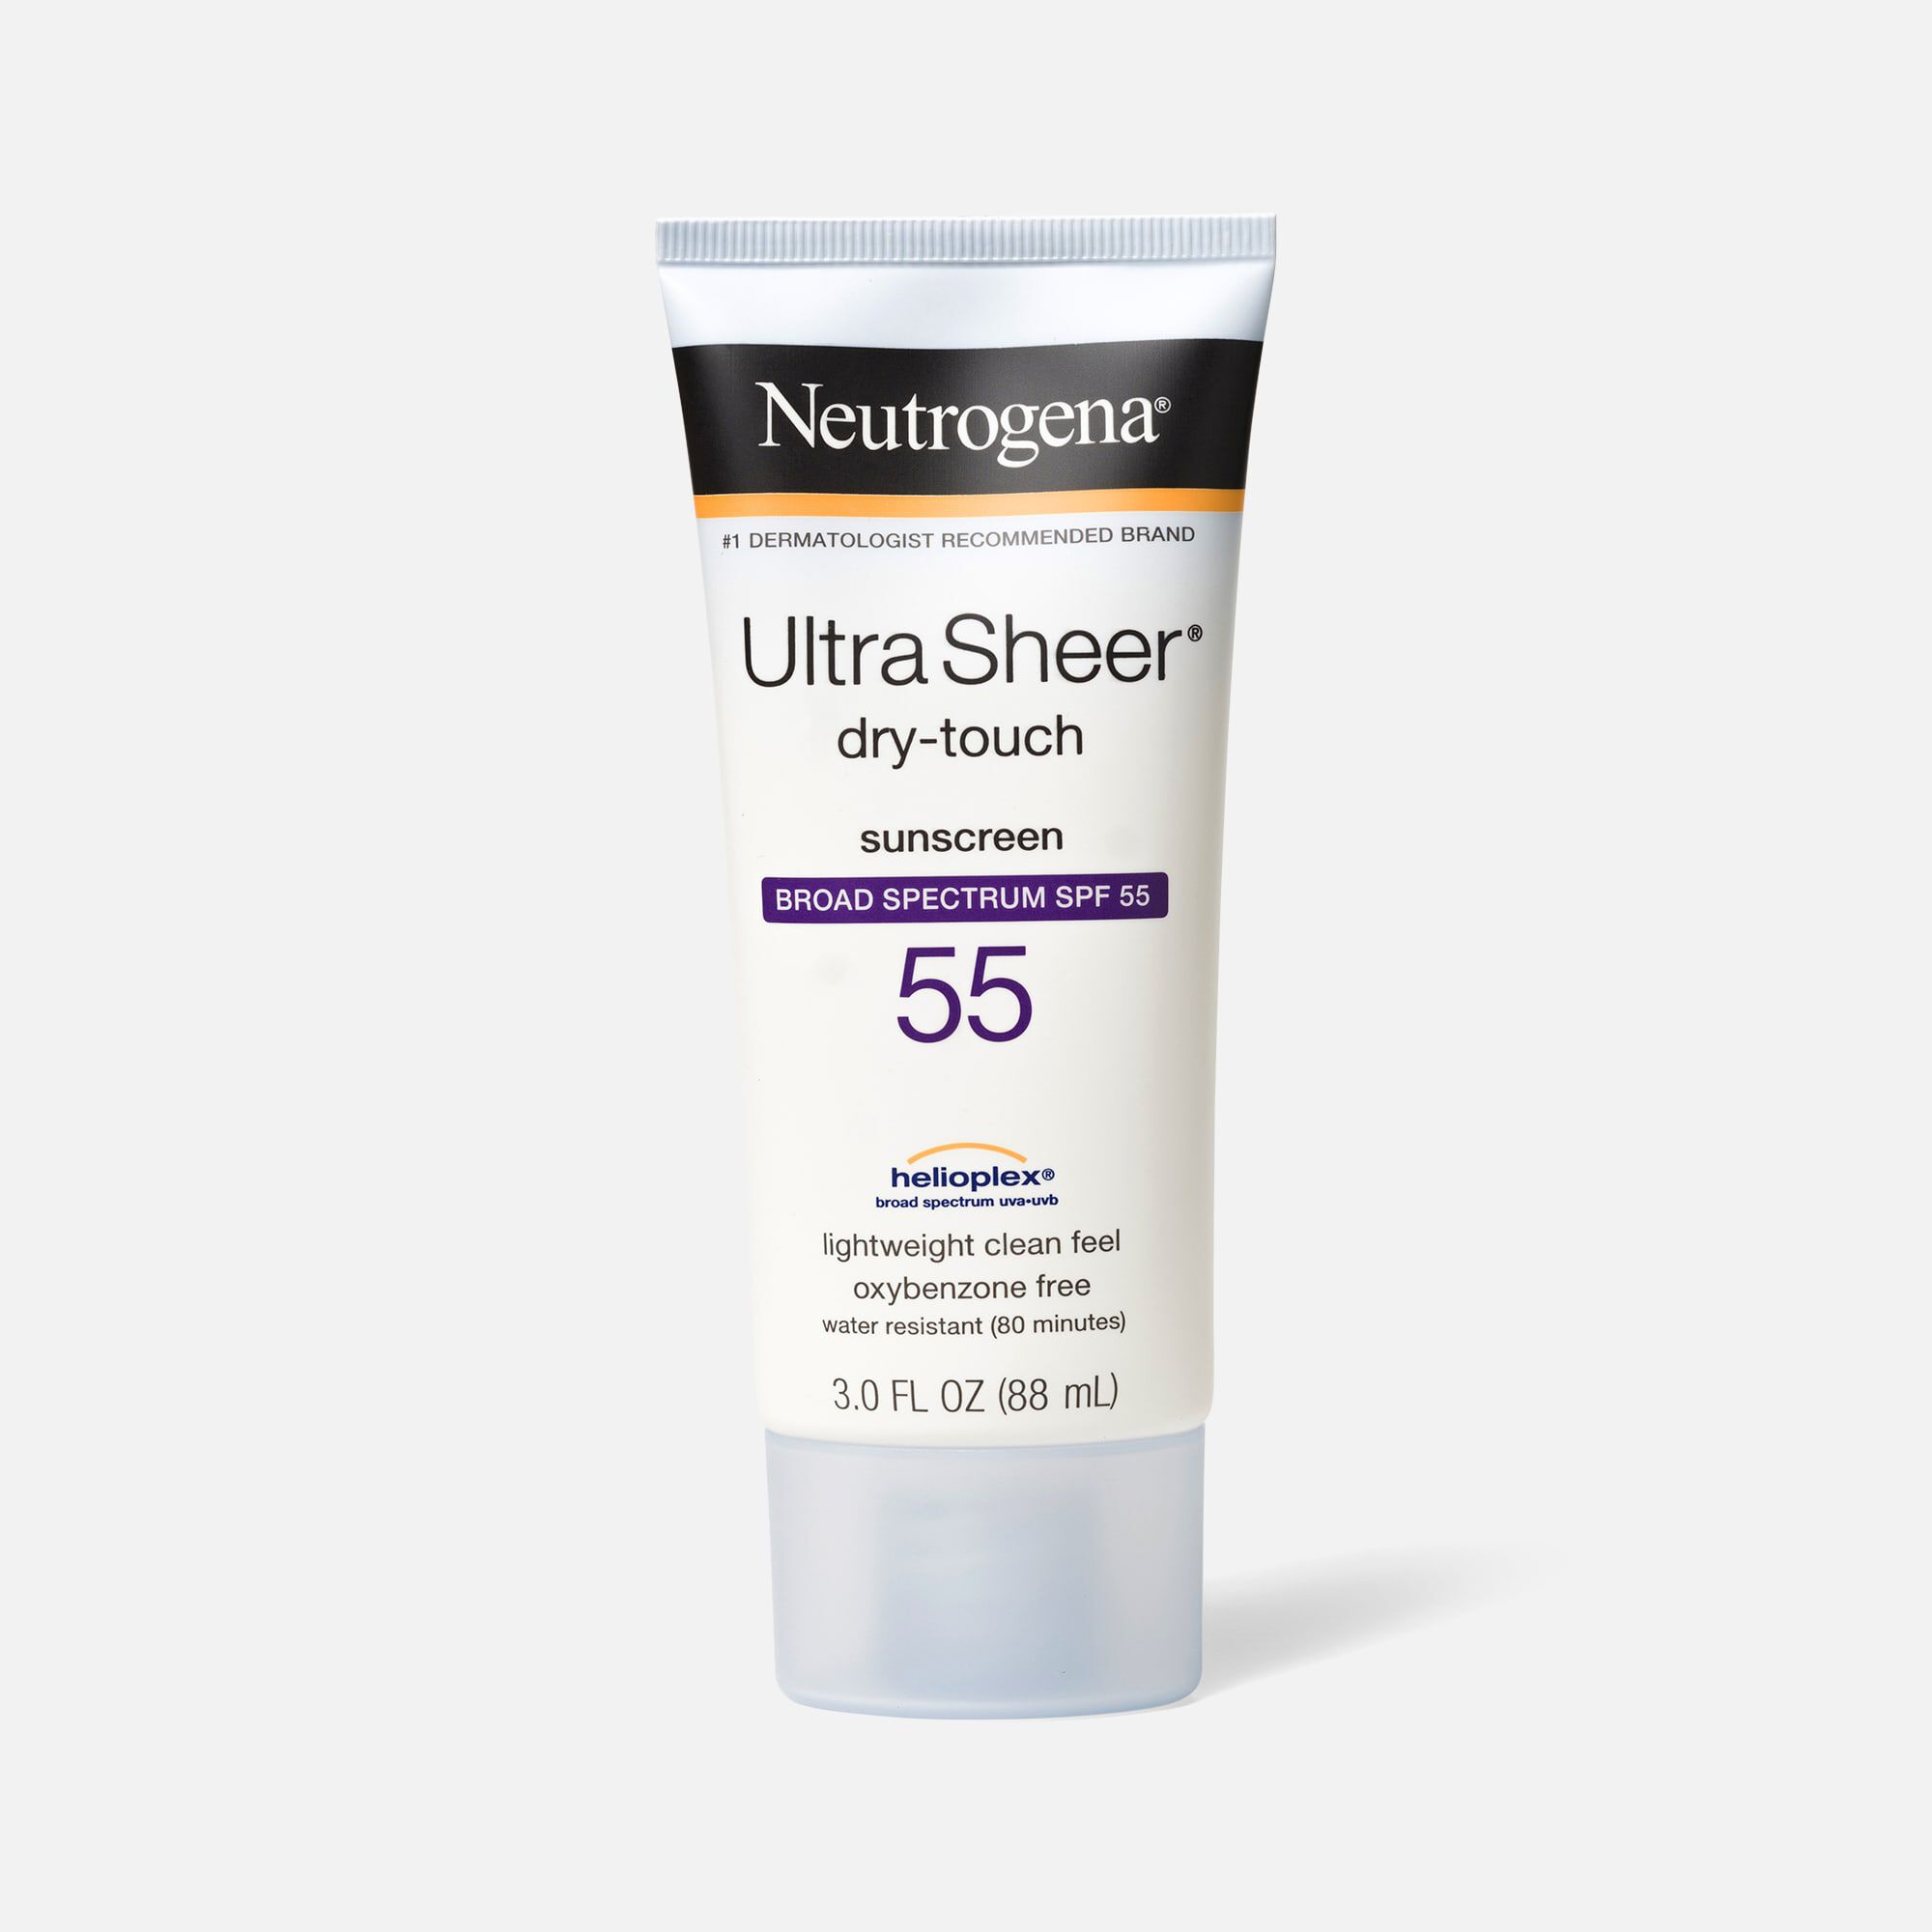 neutrogena pregnancy safe sunscreen amazon